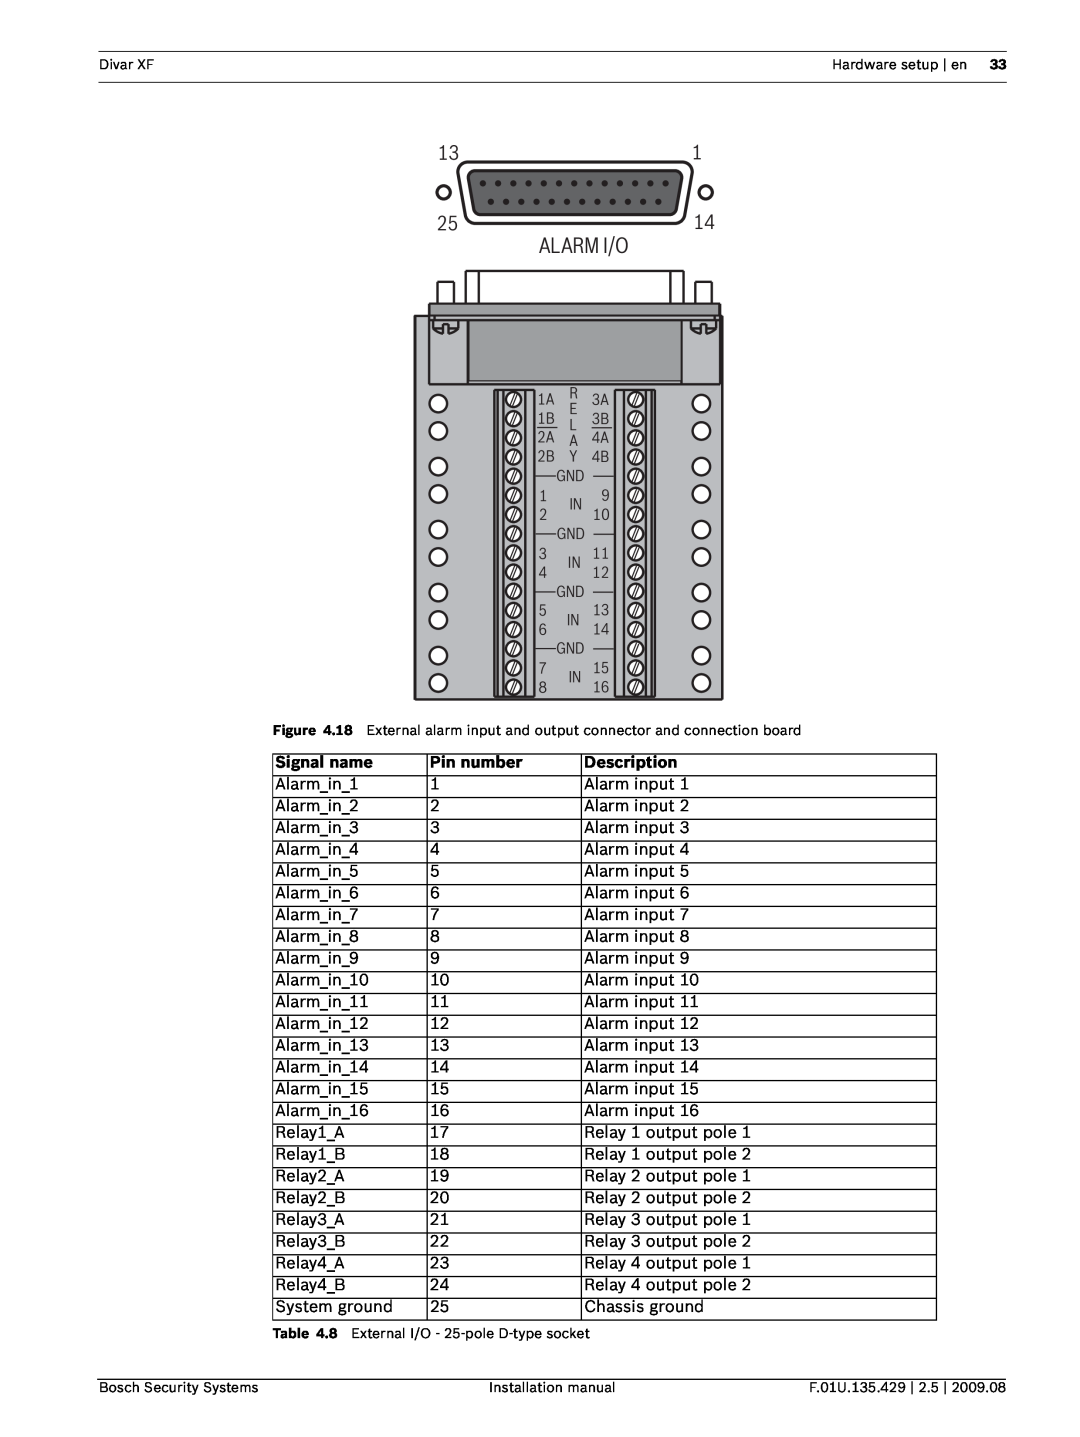 Bosch Appliances XF installation manual Alarm I/O, Signal name, Pin number, Description 